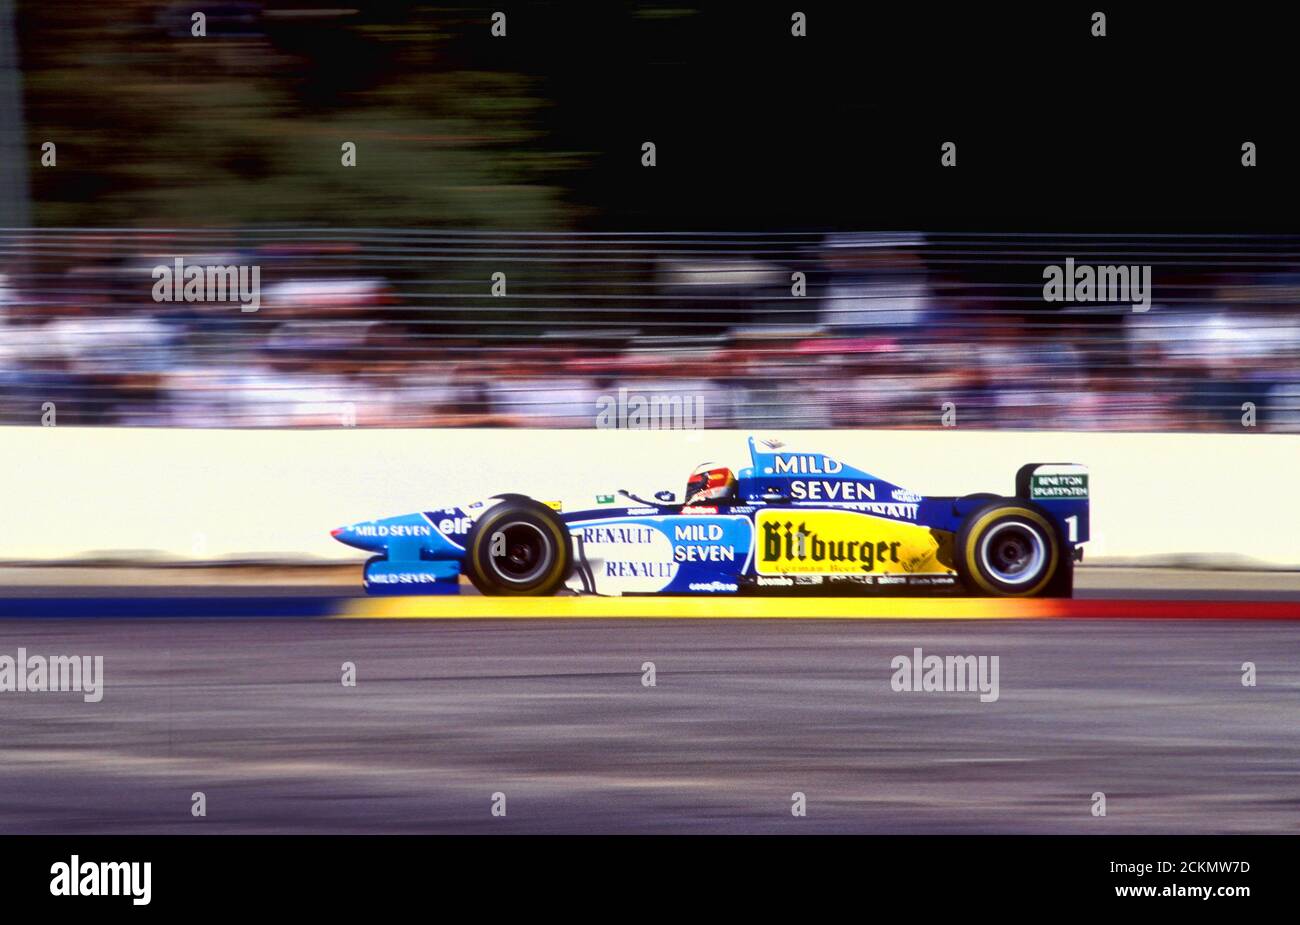 Fórmula uno, Campeonato del Mundo 1996, Michael Schumacher conduciendo el coche de Benetton, Adelaide, Australia del Sur Foto de stock